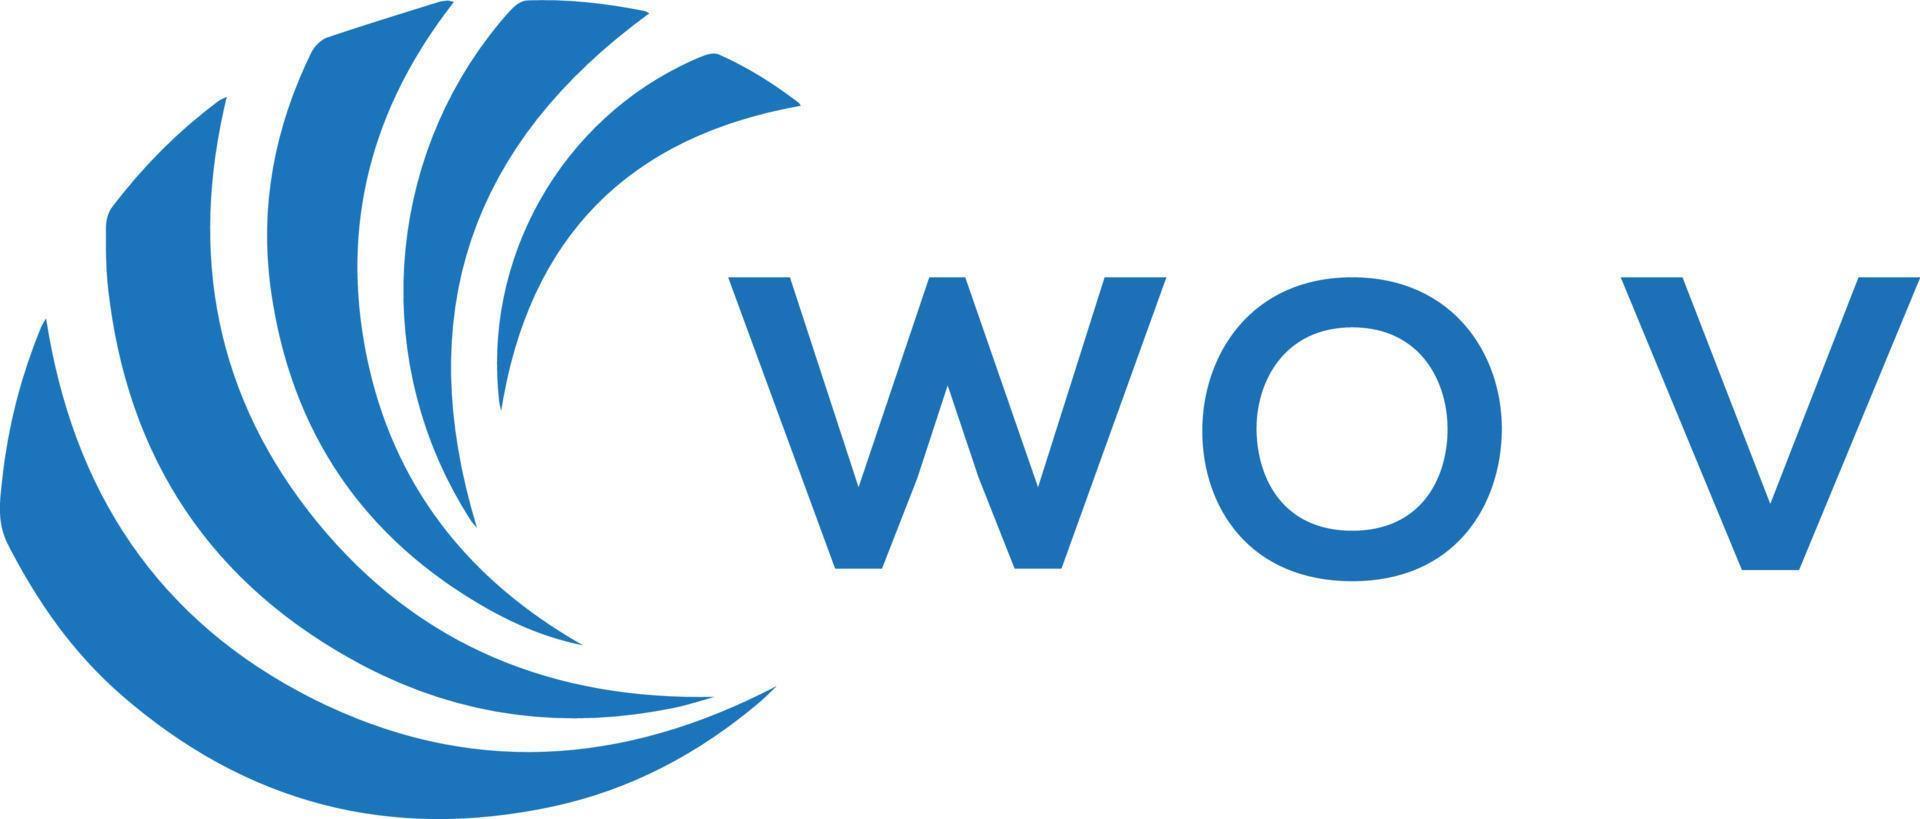 wov brev logotyp design på vit bakgrund. wov kreativ cirkel brev logotyp begrepp. wov brev design. vektor